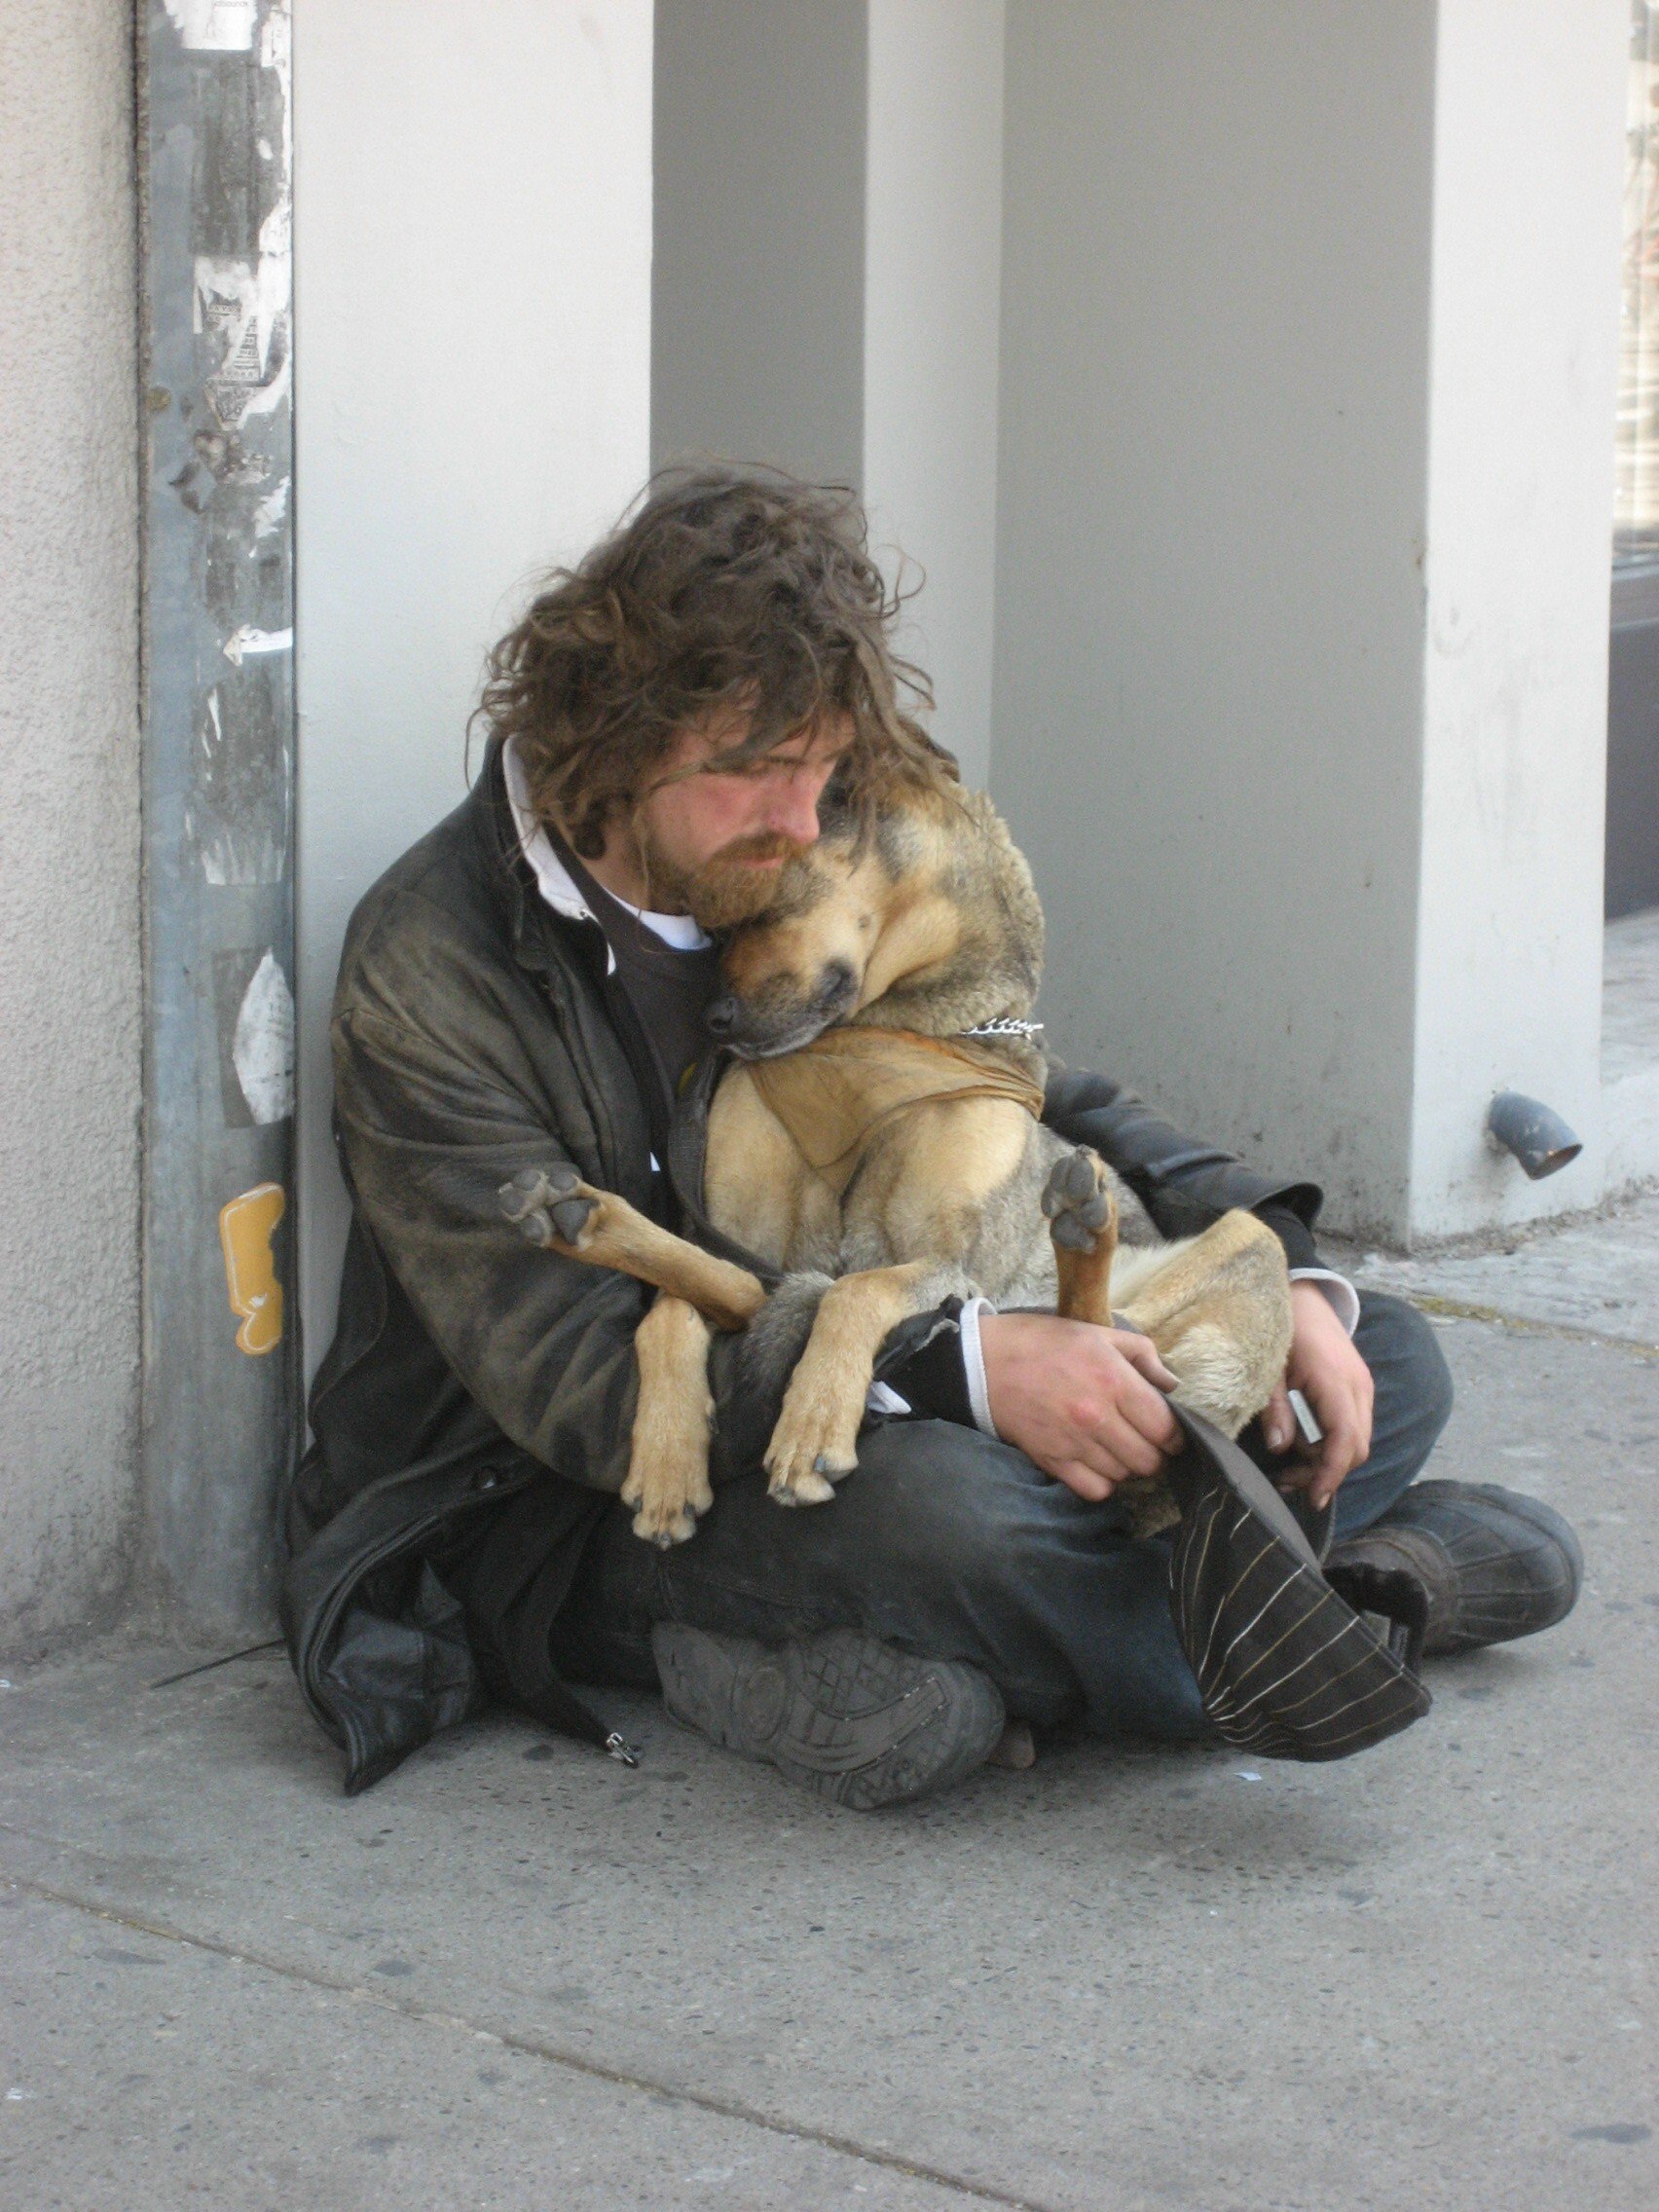 http://rebirth22.files.wordpress.com/2007/06/homeless-cuddling-dog-by-kirsten-bole-100-dpi.jpg